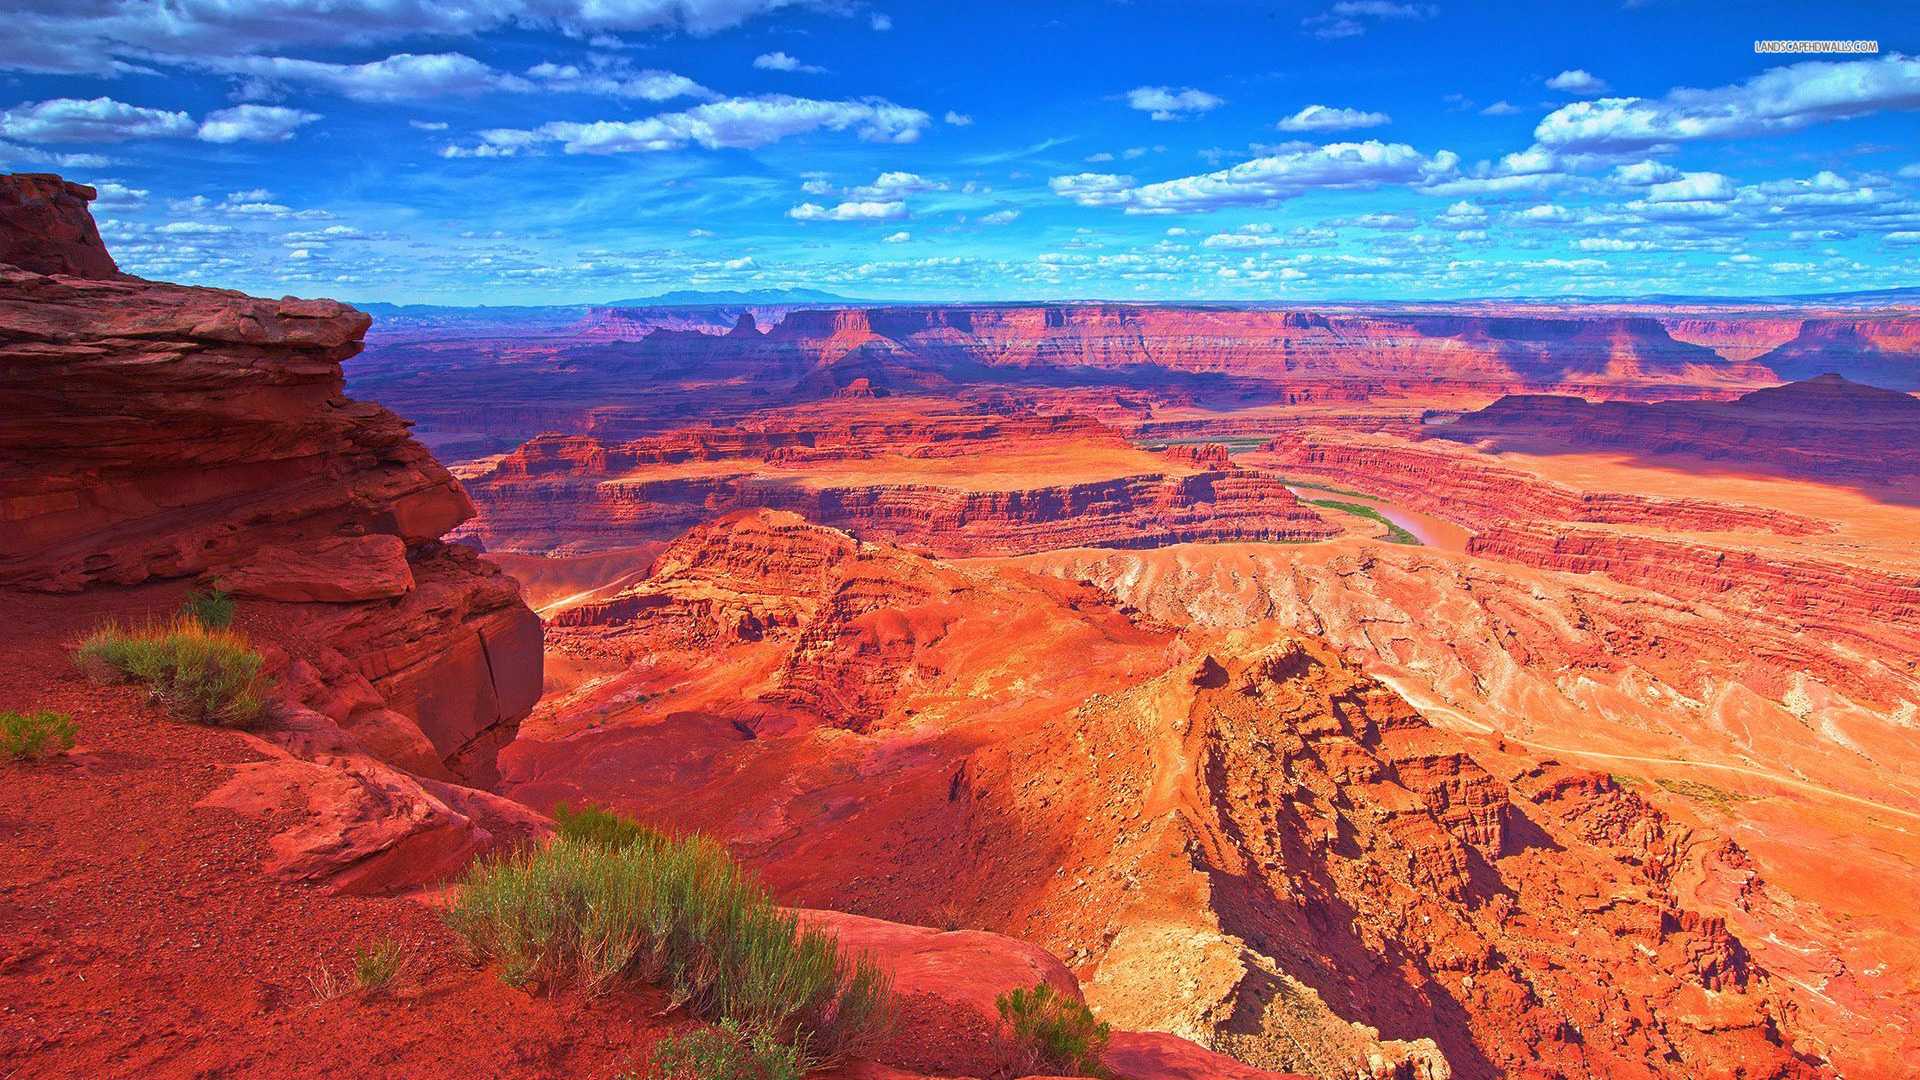 Macbook Pro Retina Grand Canyon Wallpaper FG7 is free HD wallpaper